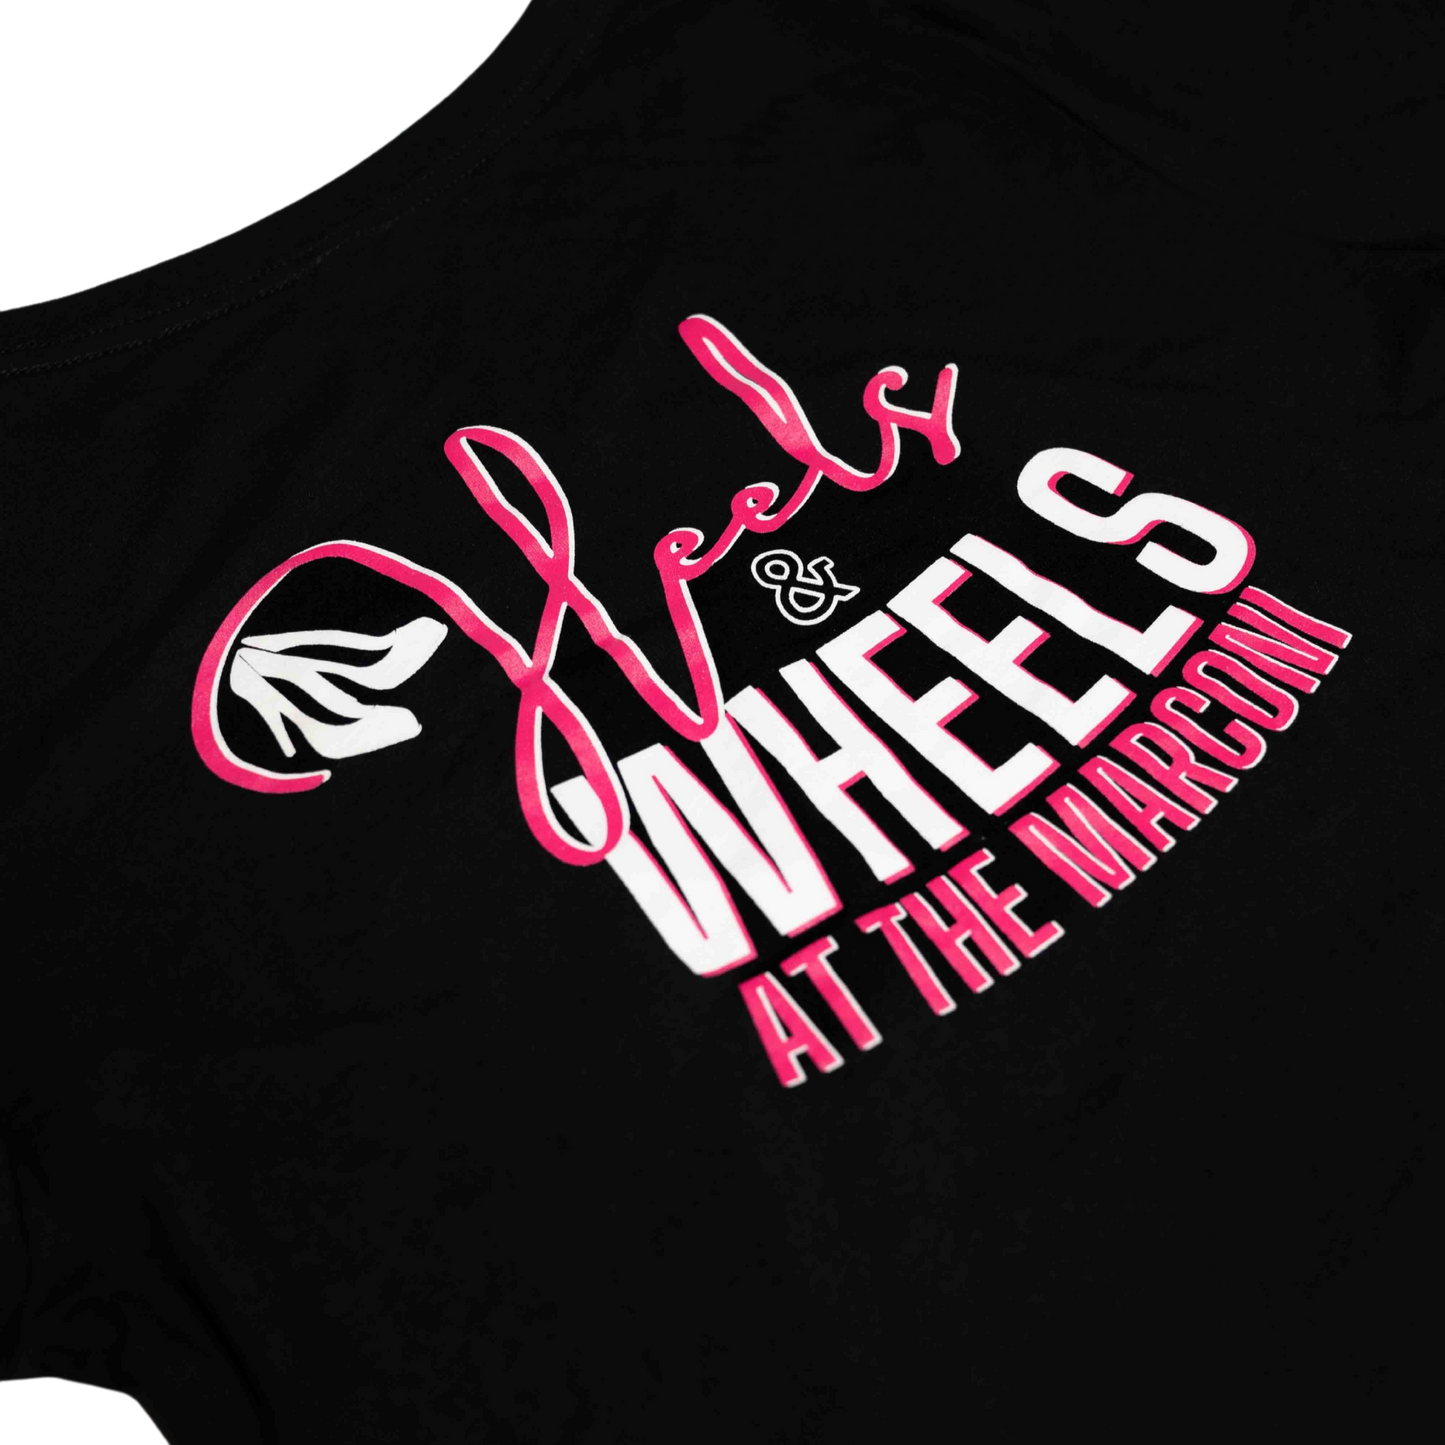 NEW - Heels & Wheels - Women's V-Neck Tee Shirt